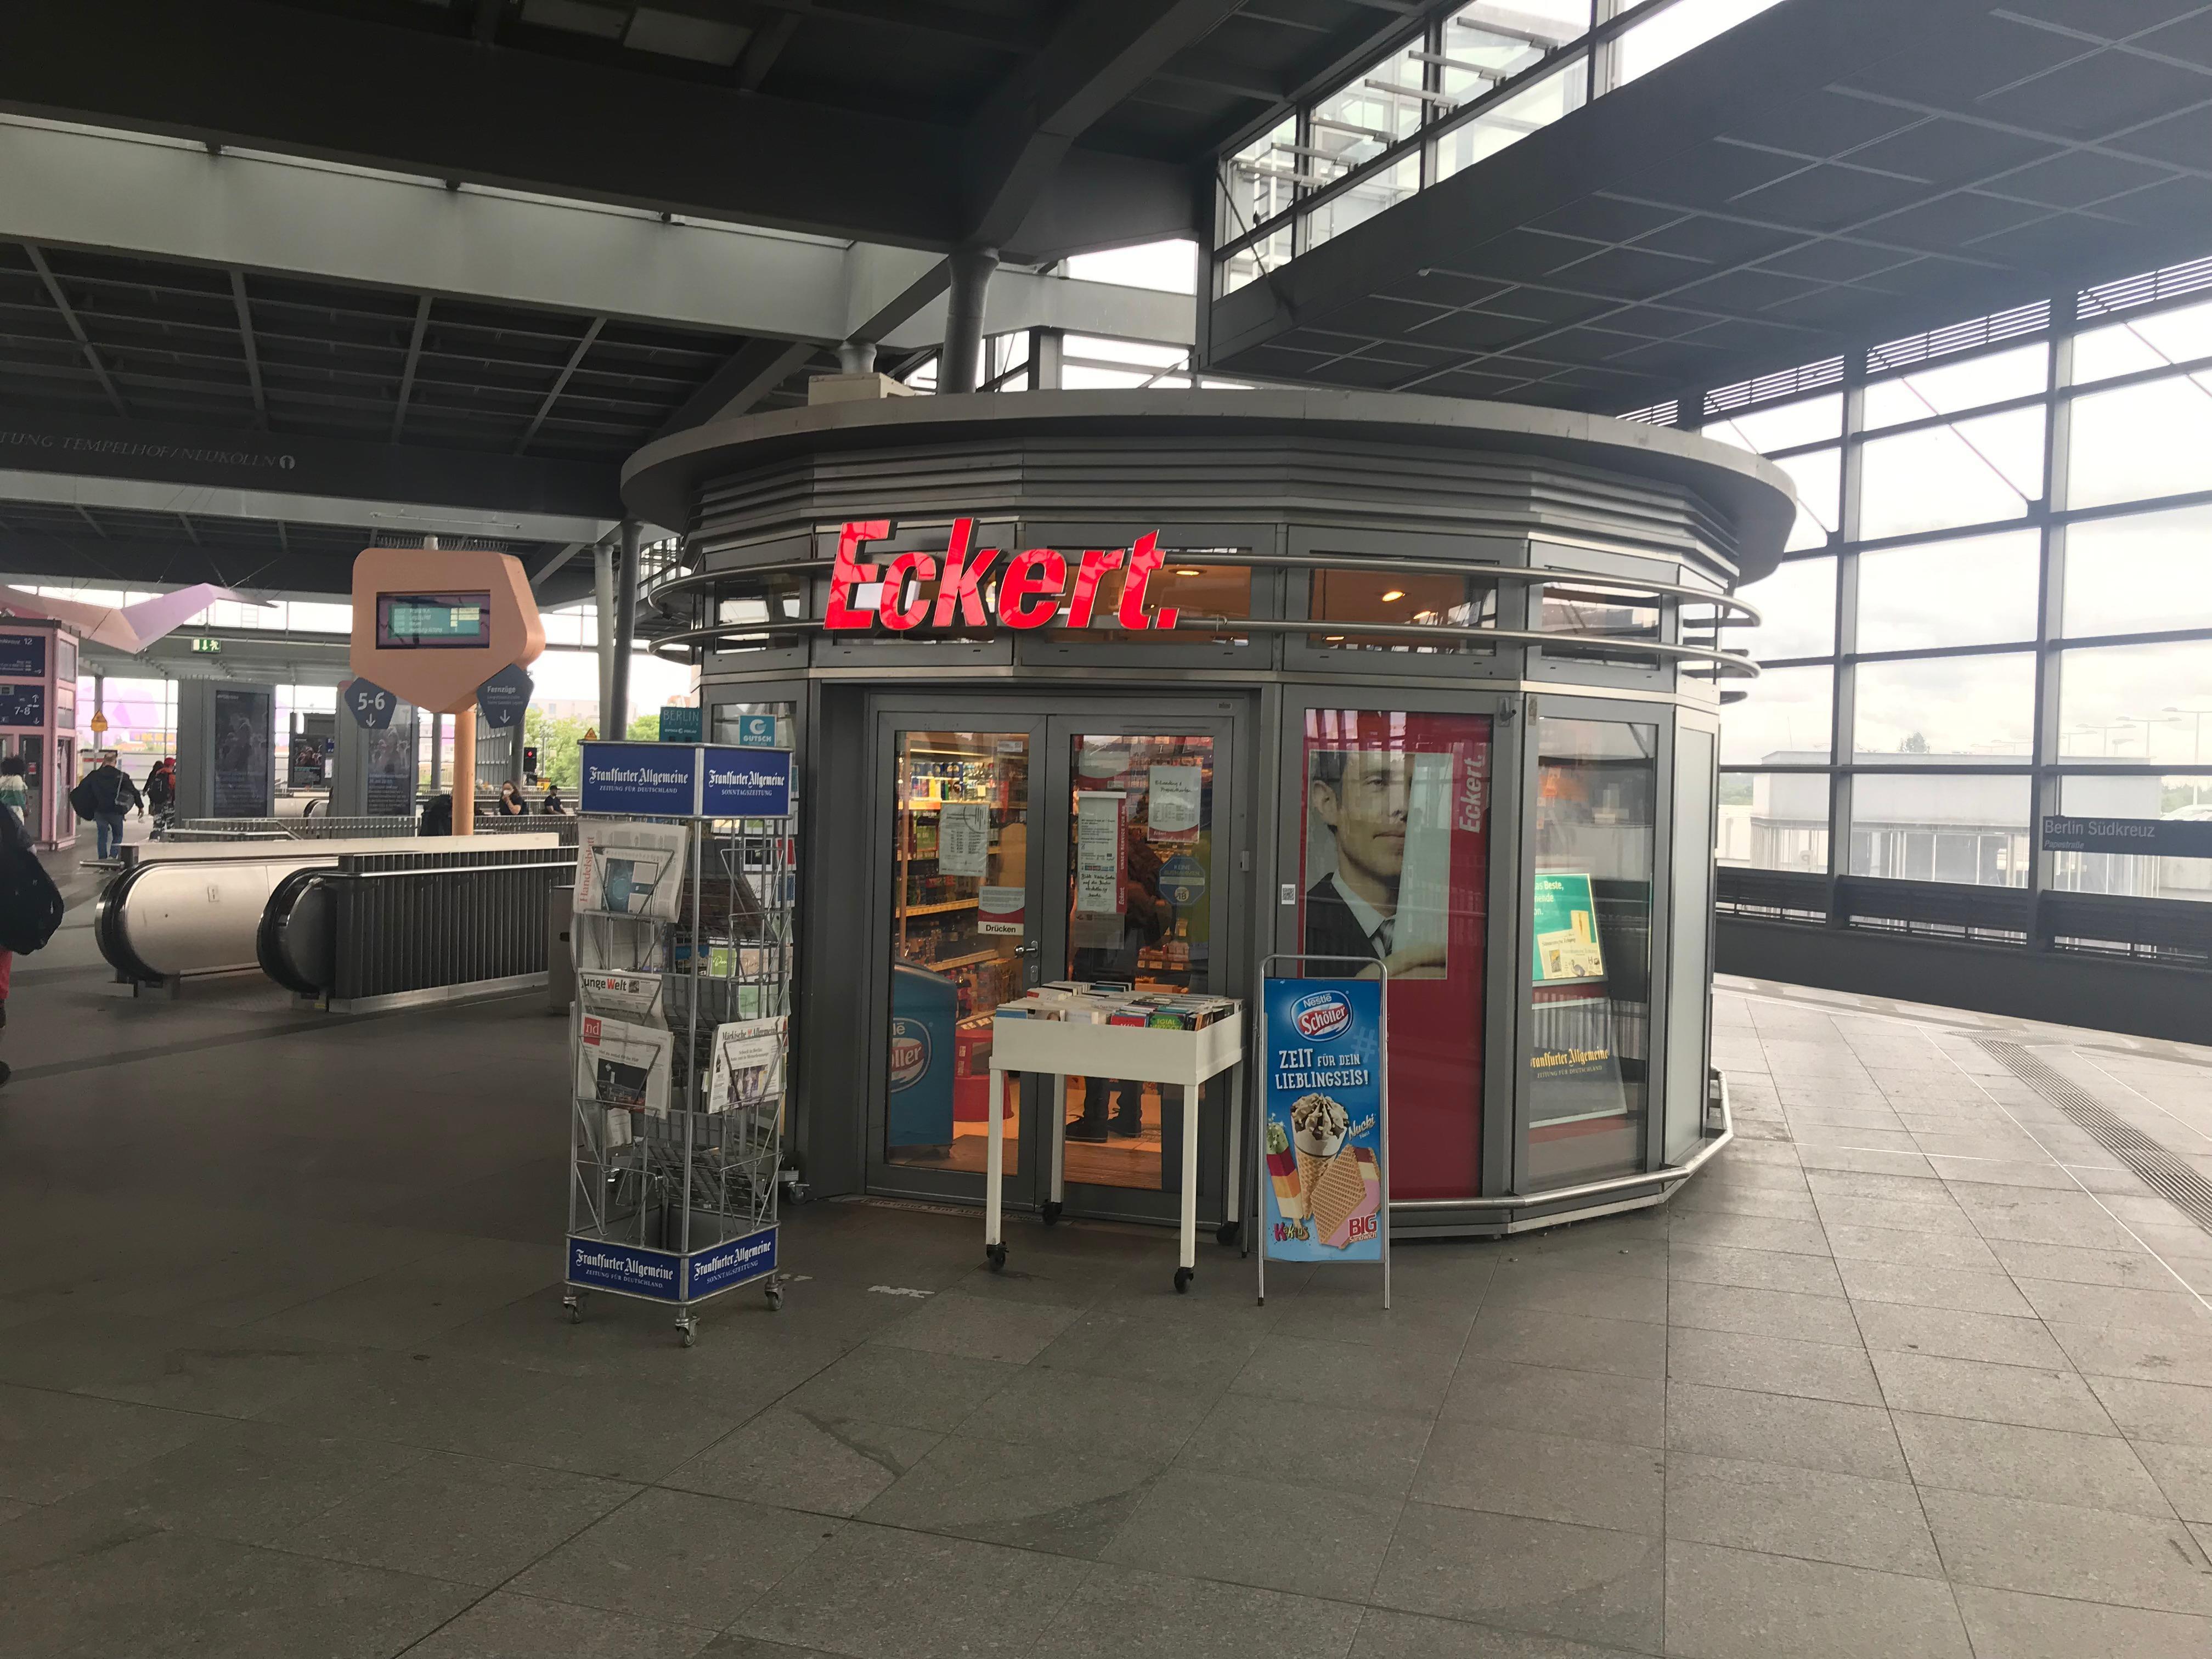 Eckert in Berlin